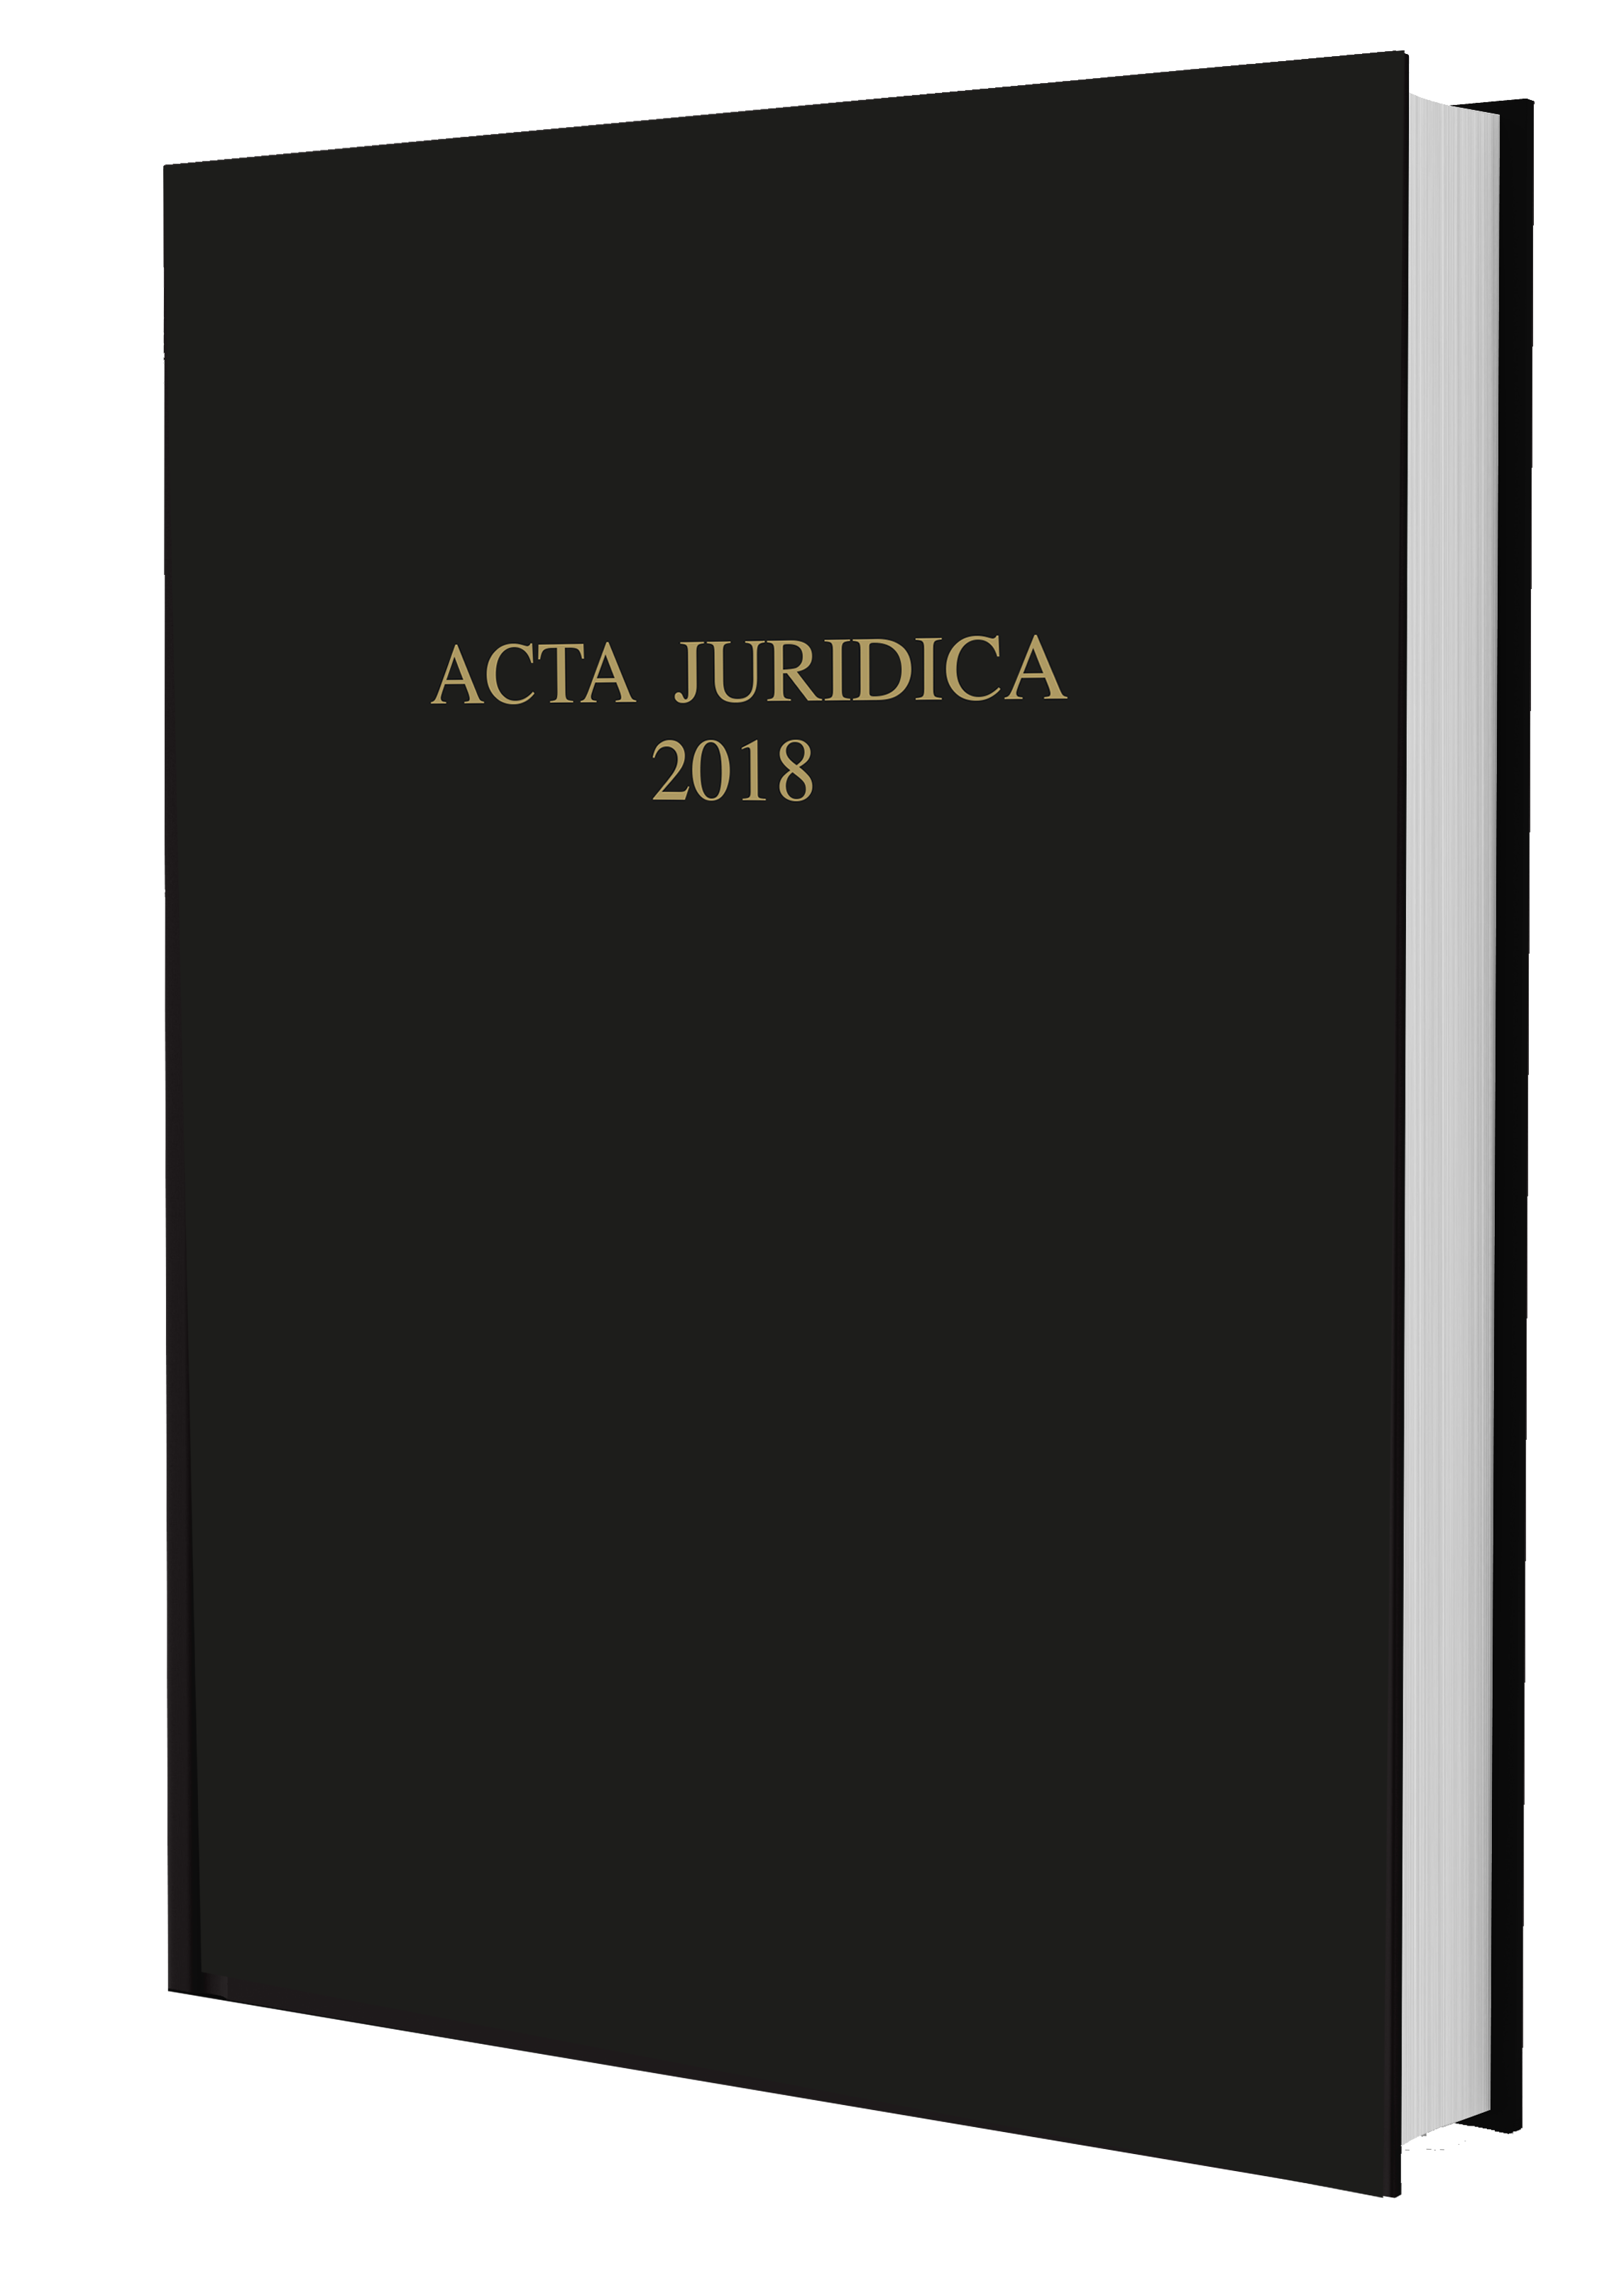 Acta Juridica 2018